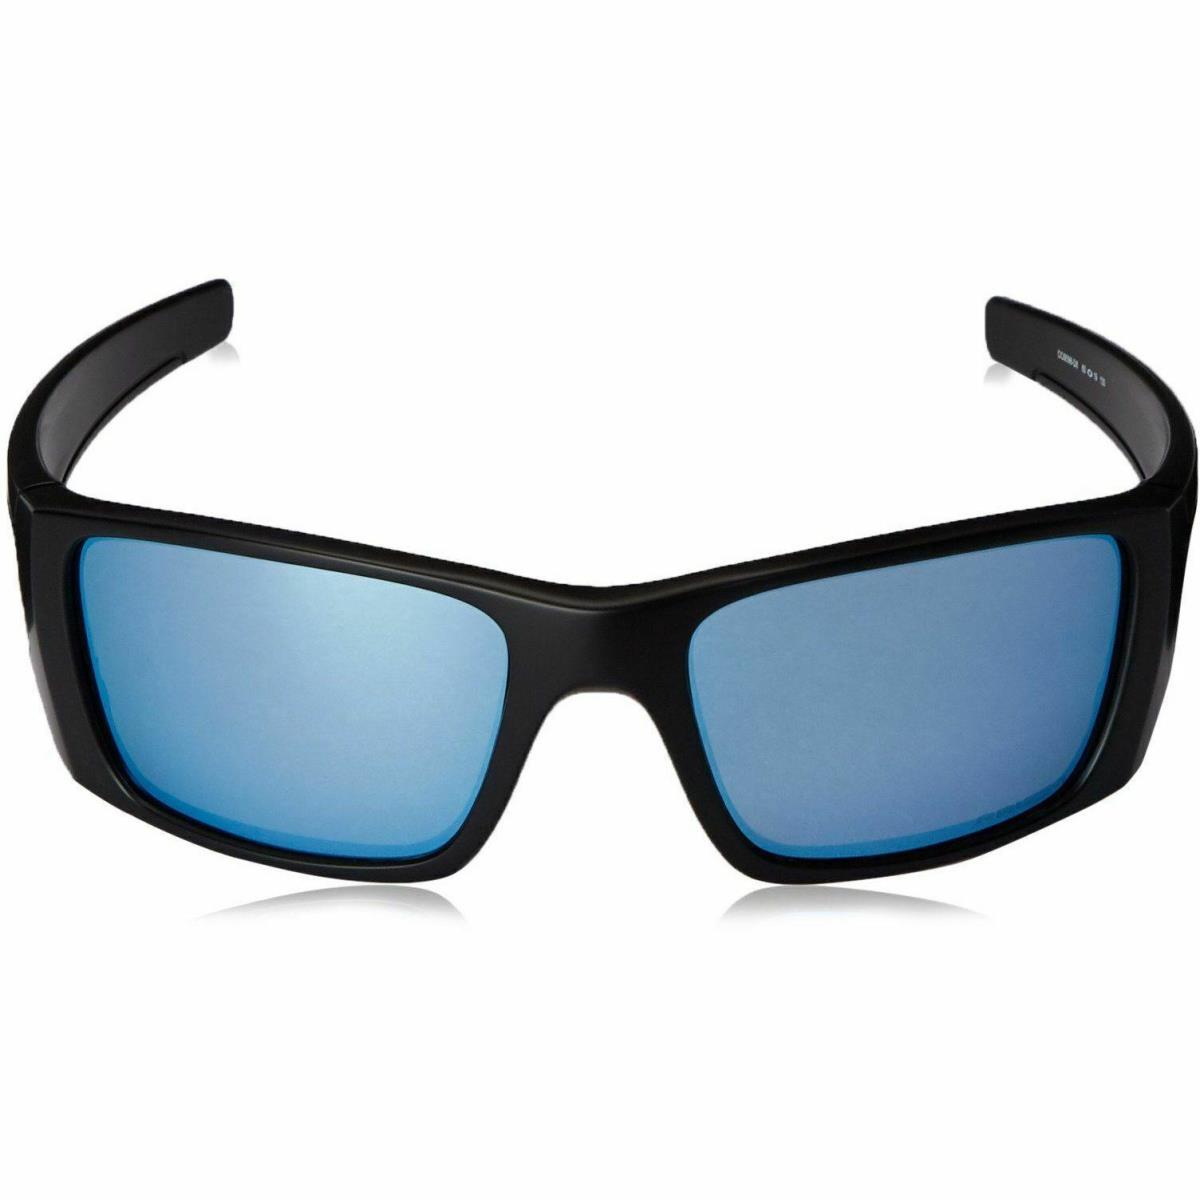 OO9096-D8 Mens Oakley Fuel Cell Polarized Sunglasses - Frame: Black, Lens: Blue